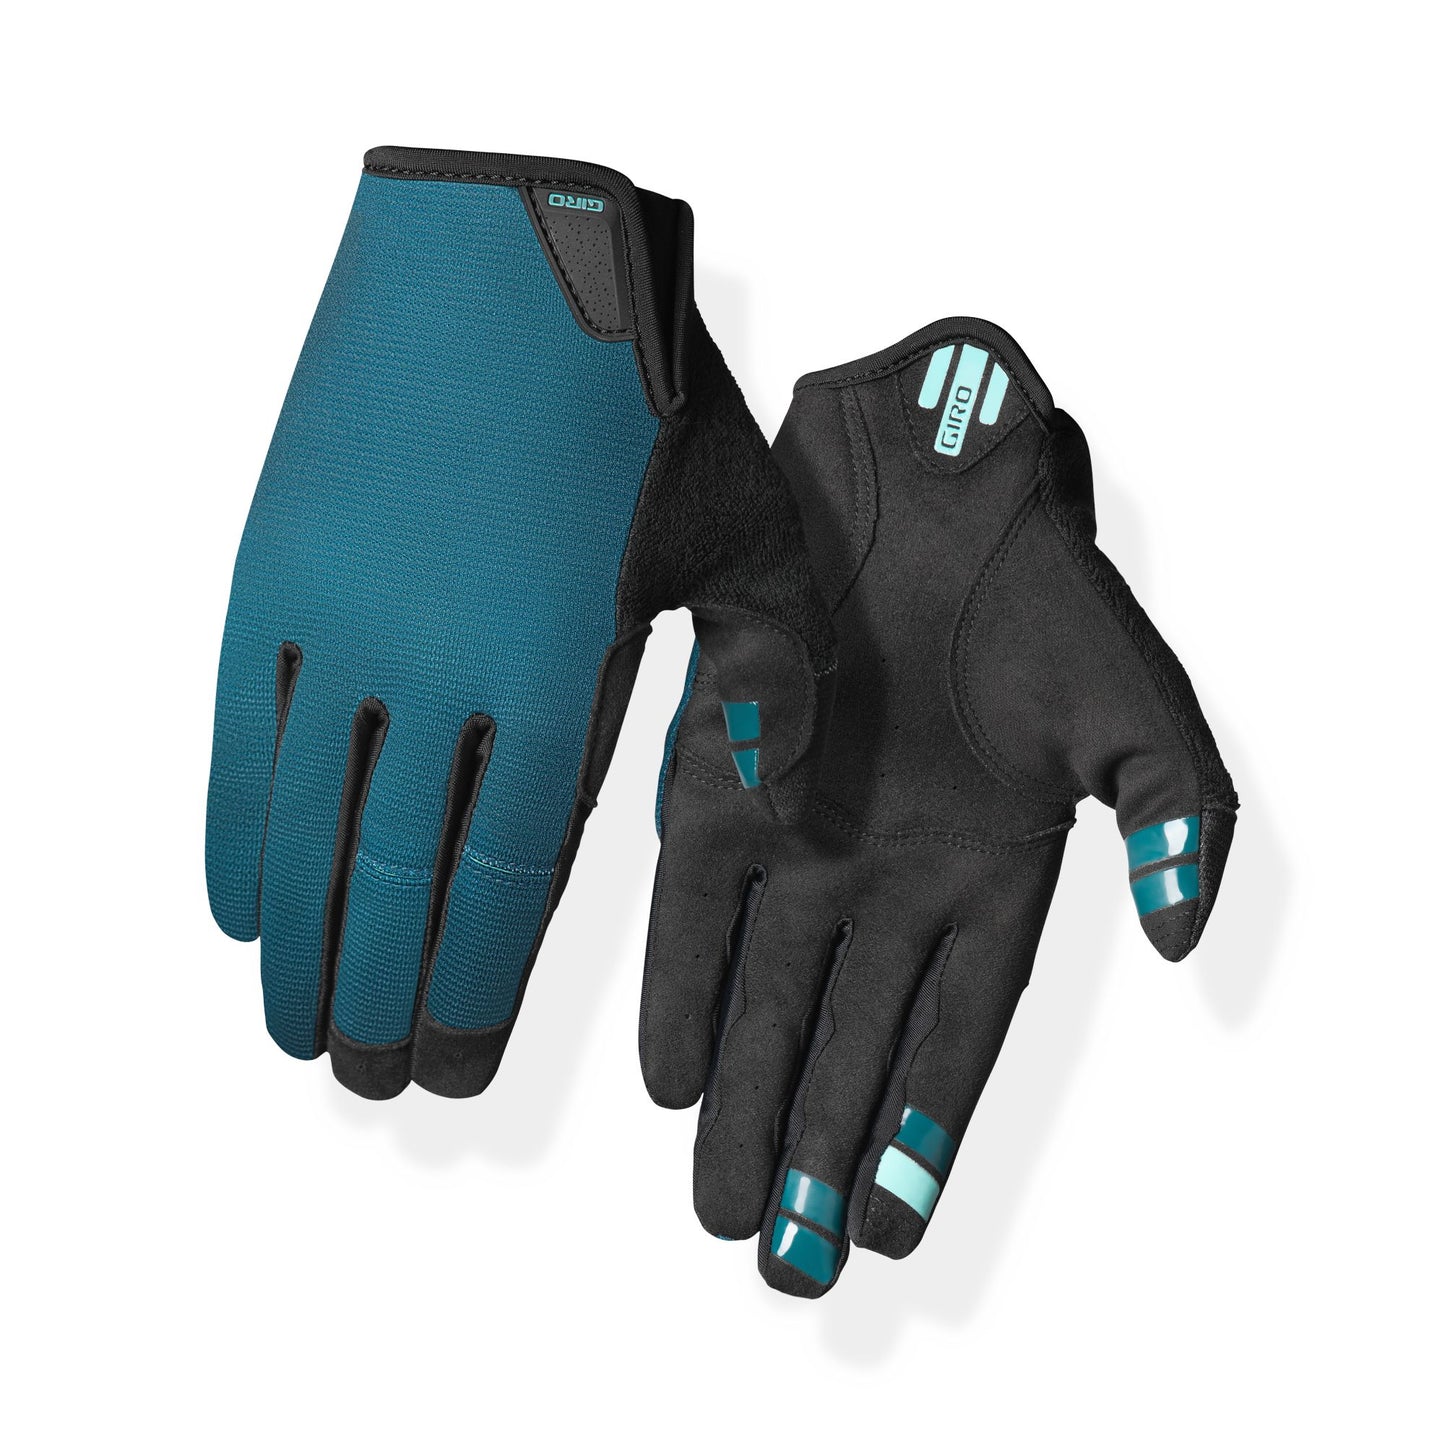 Giro Women's La DND Glove Harbor Blue/Screaming Teal Bike Gloves